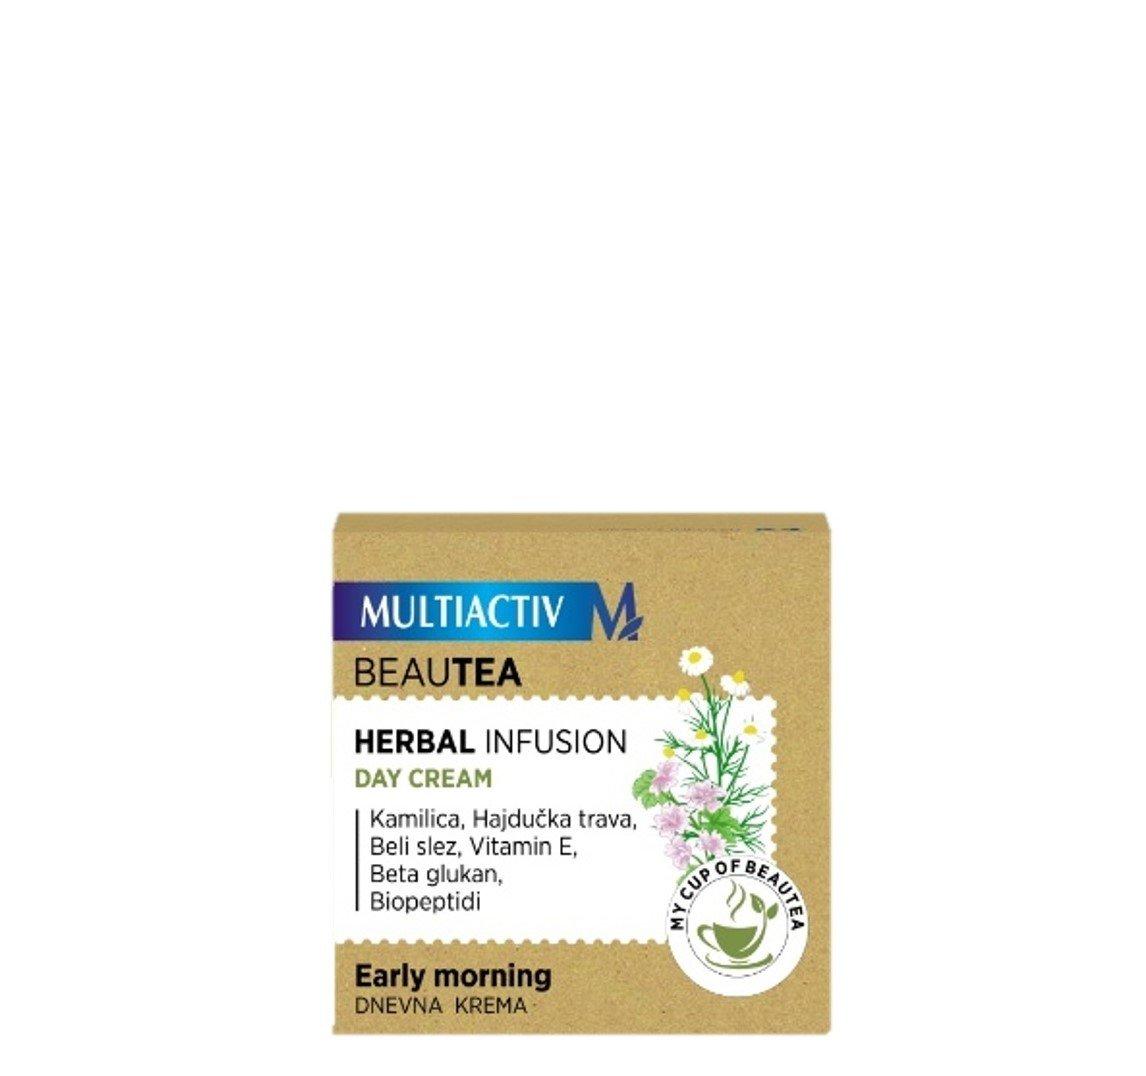 MULTIACTIV Dnevna krema Herbal Infusion Beautea 50 ml